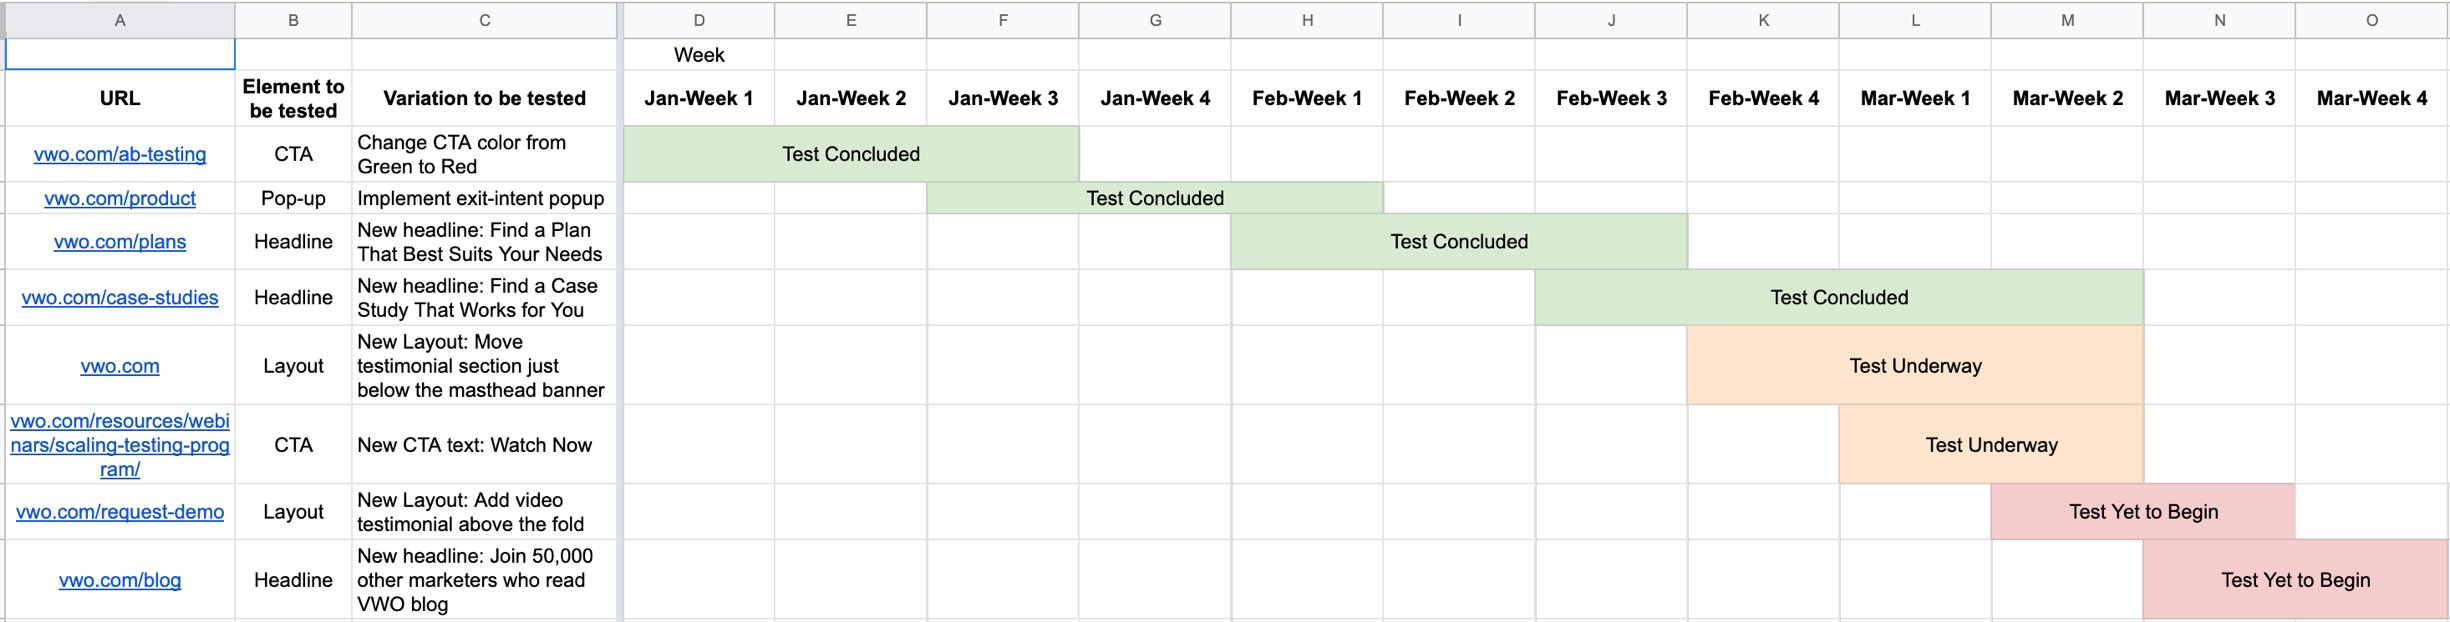 A/B testing calendar sample